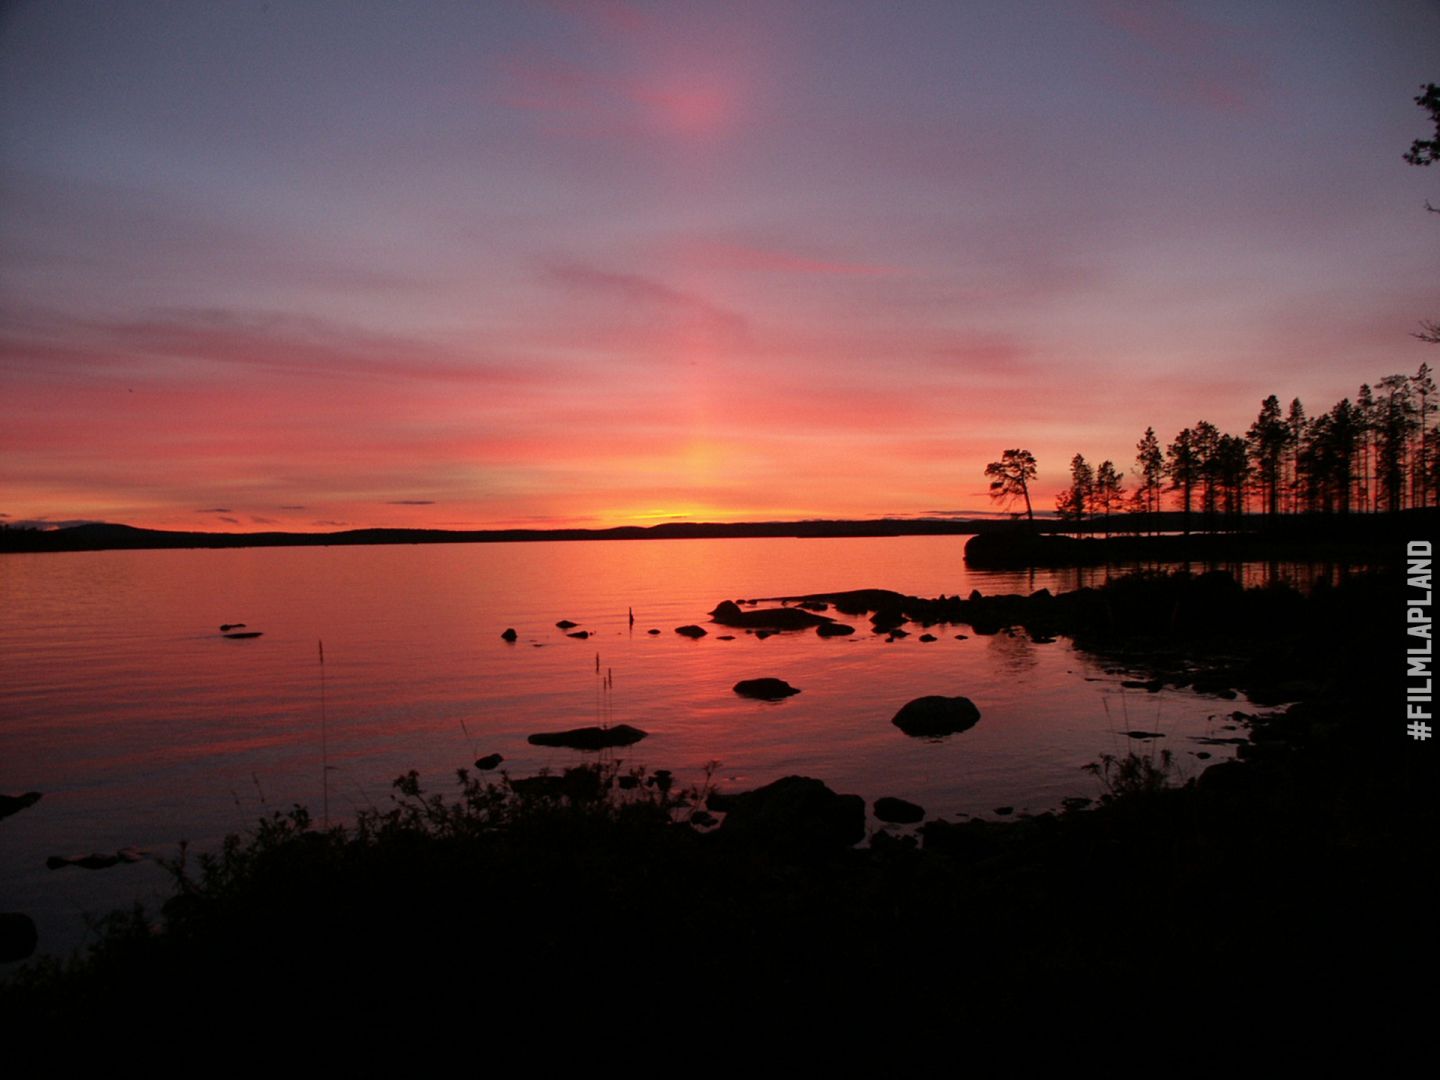 Sunset over Lake Inari in Finland